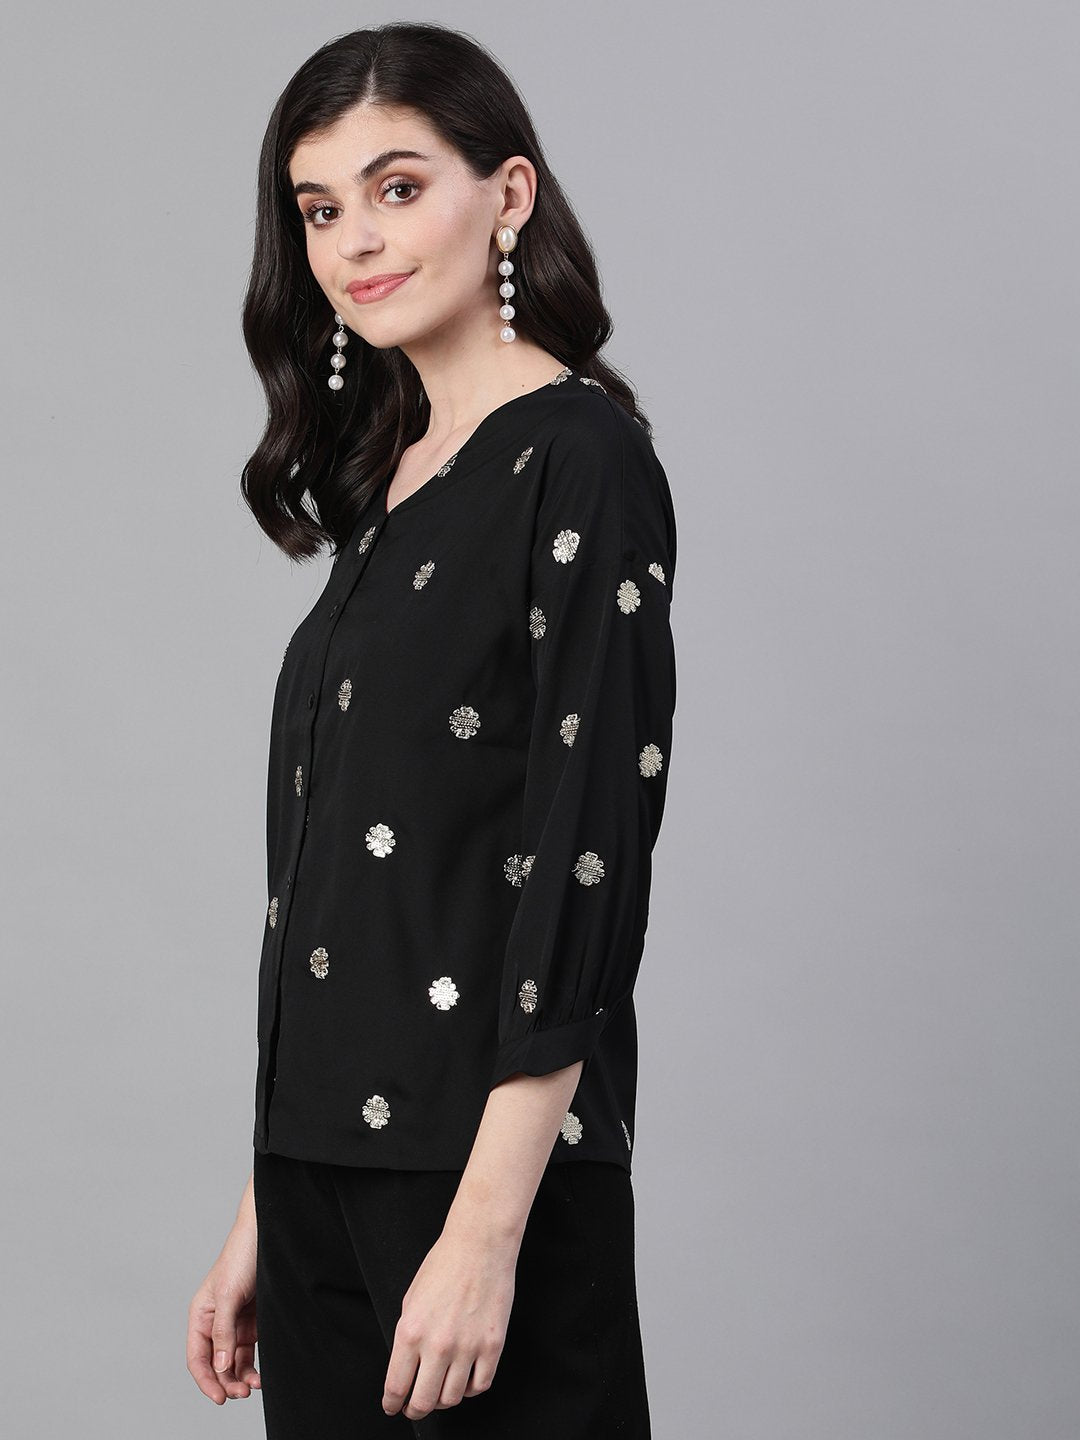 Ishin Women's Poly Crepe Black Embellished Shirt Style Top 